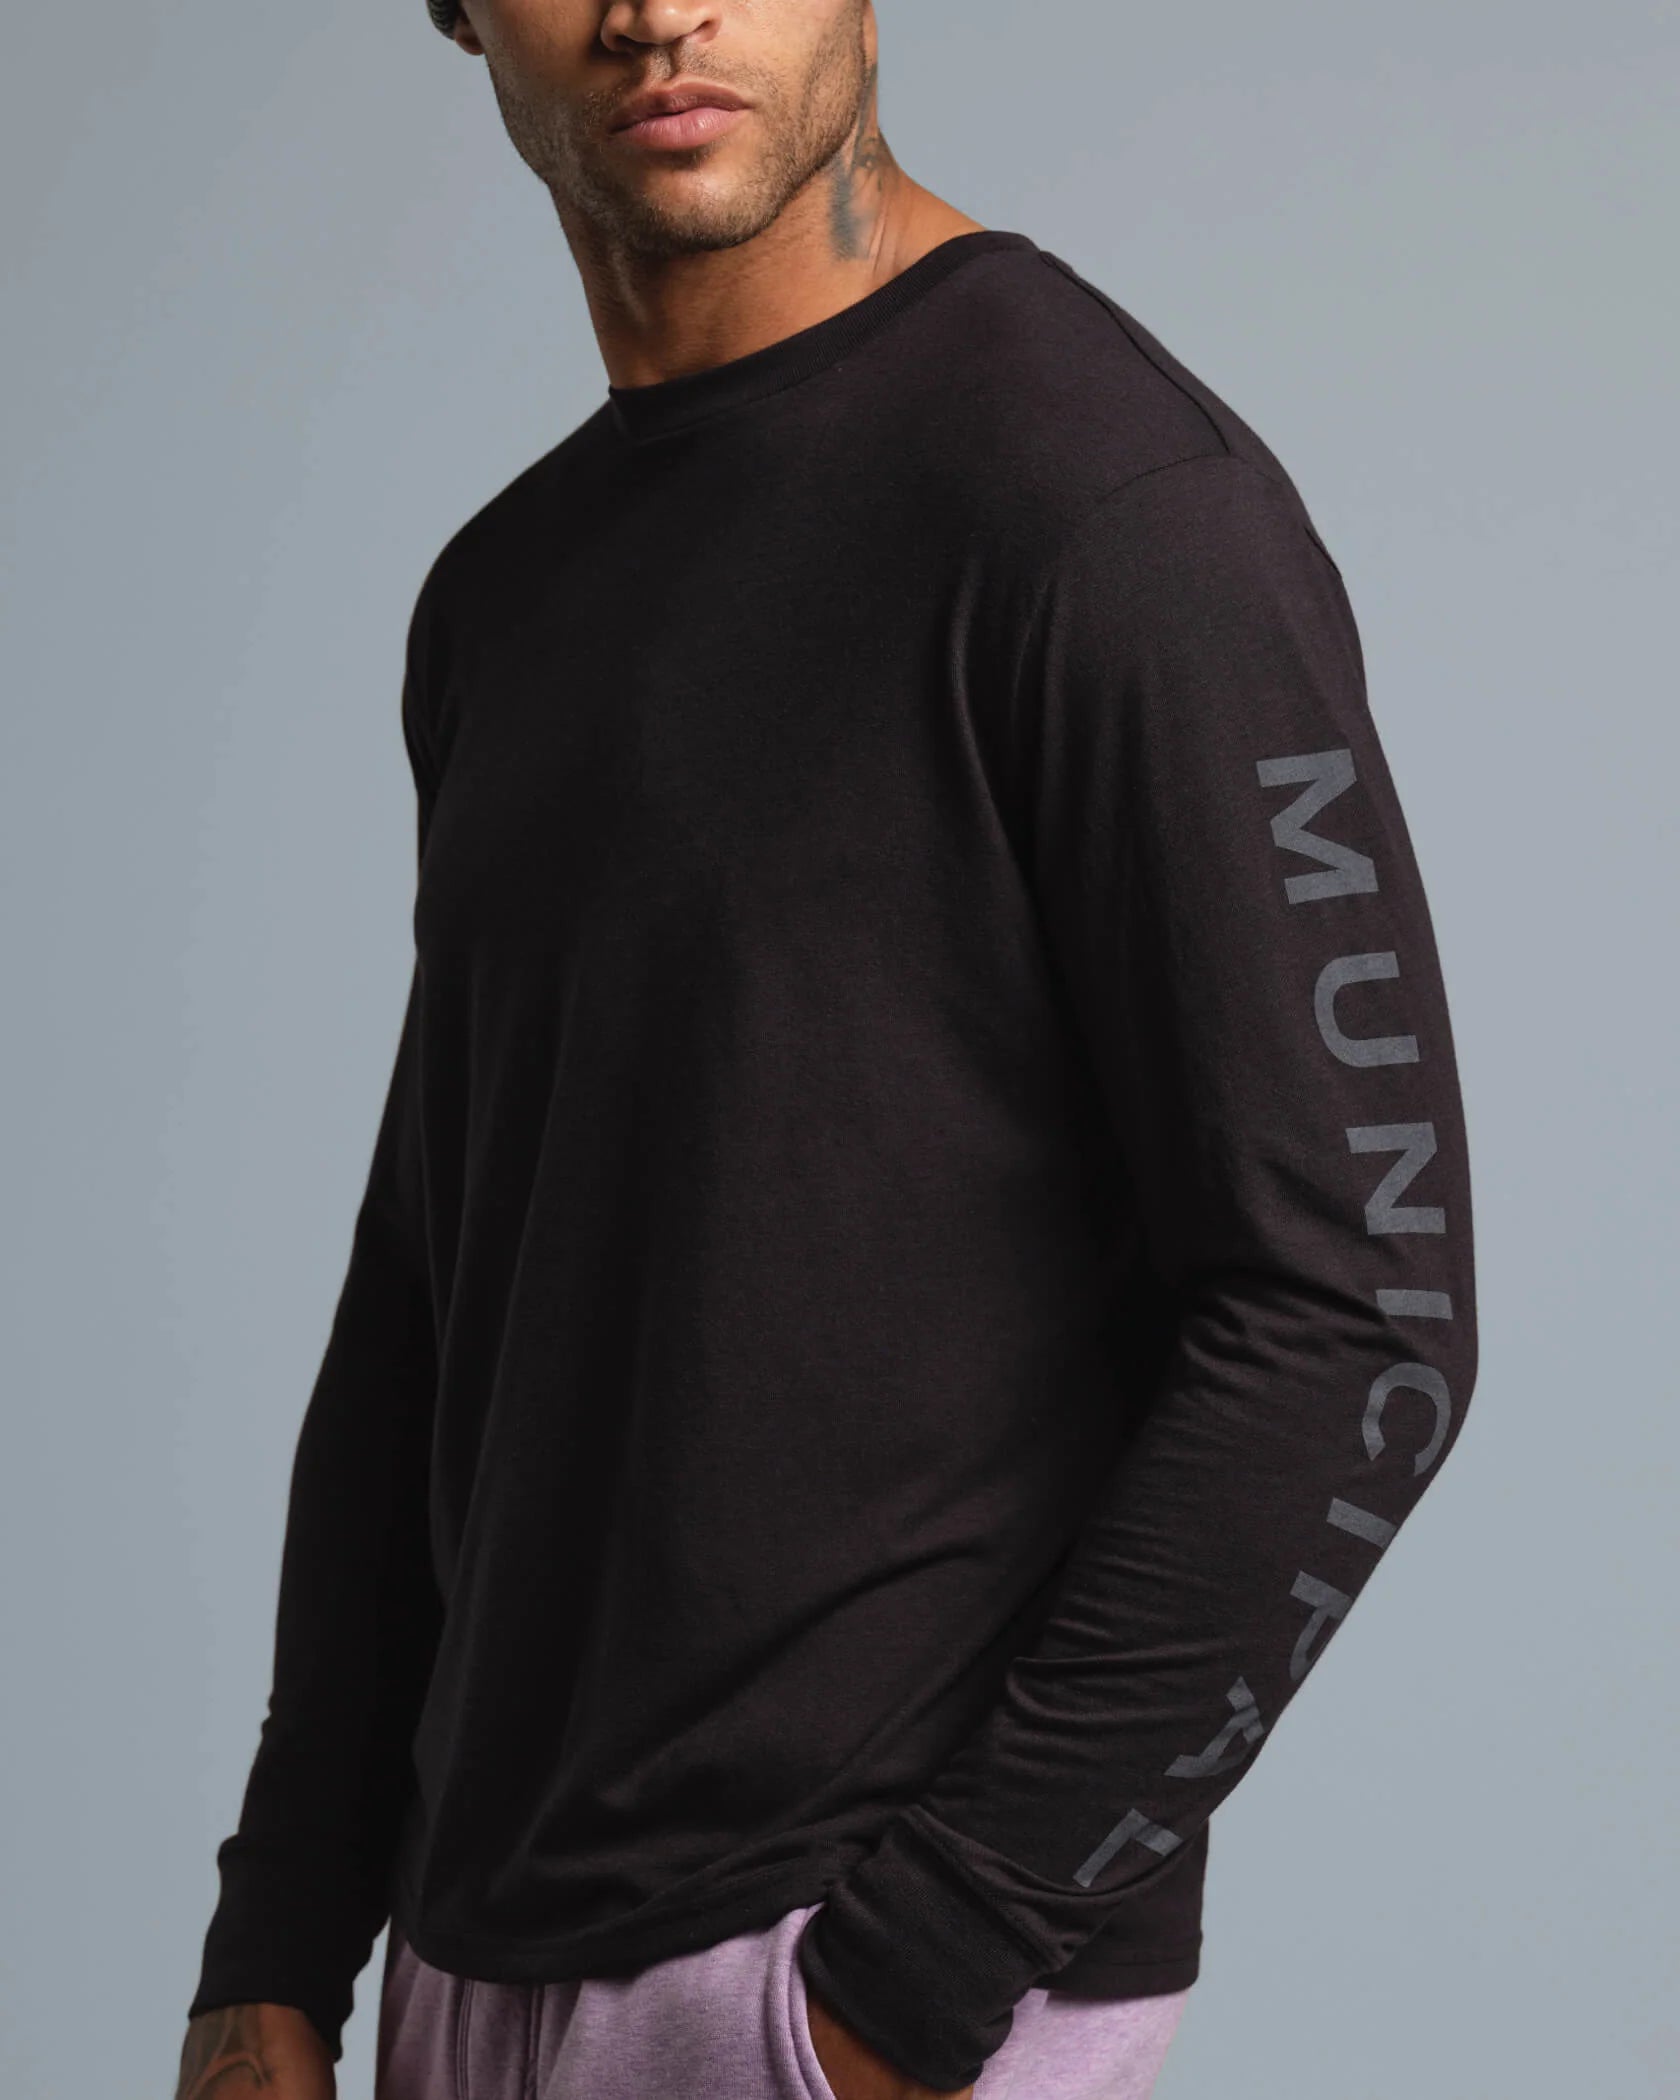 Armband SuperBlend LS T-Shirt - Black / Charcoal